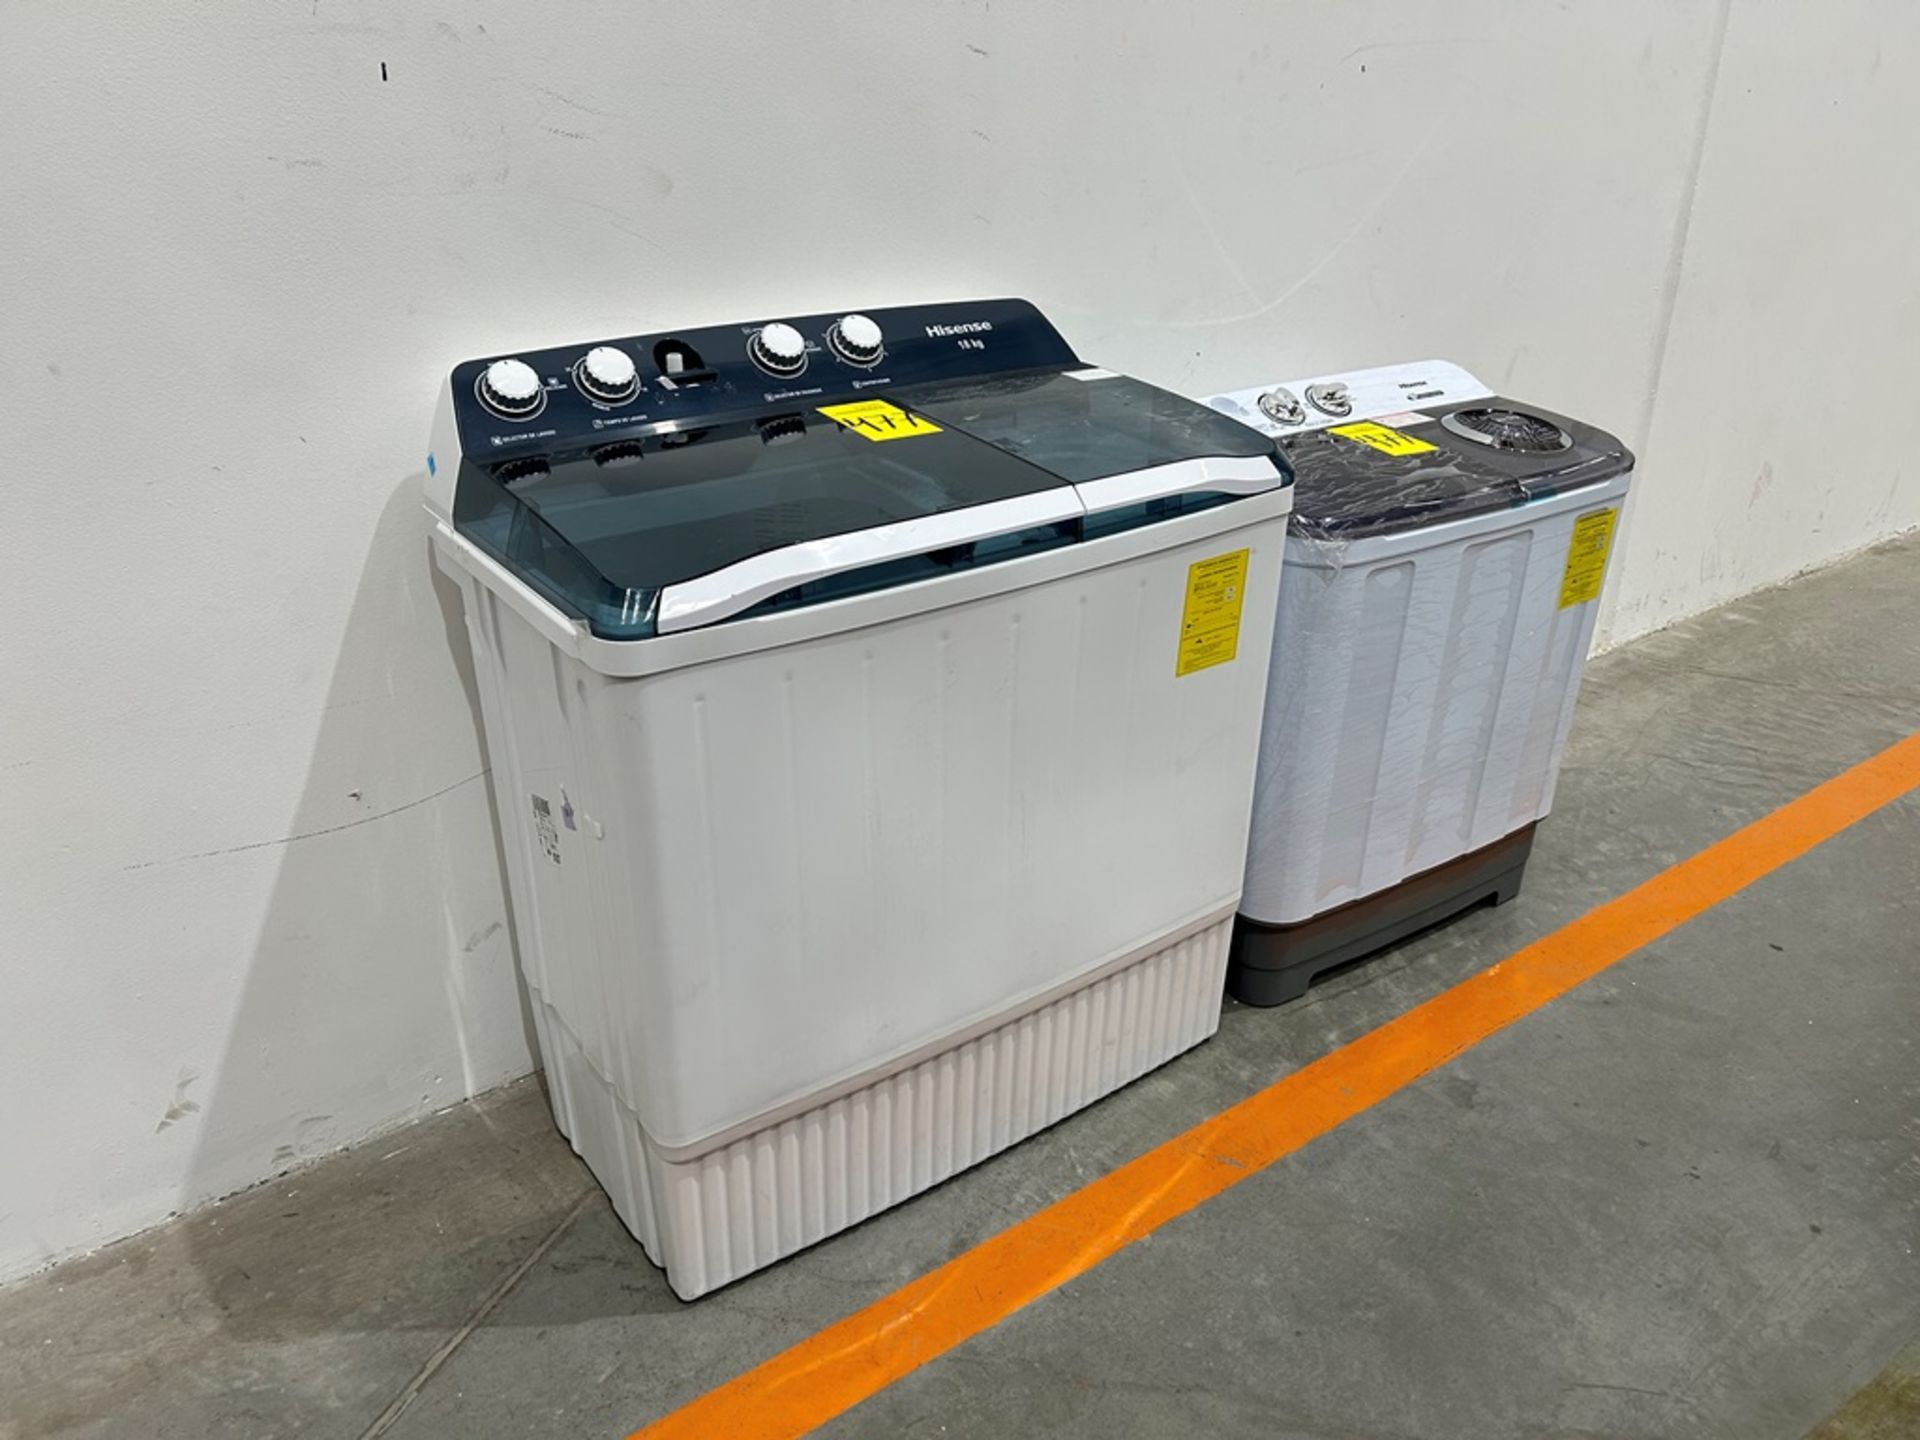 Lote de 2 lavadoras contiene: 1 Lavadora de 18 KG Marca HISENSE, Modelo WSA1801P, Serie 220342, Col - Image 2 of 12